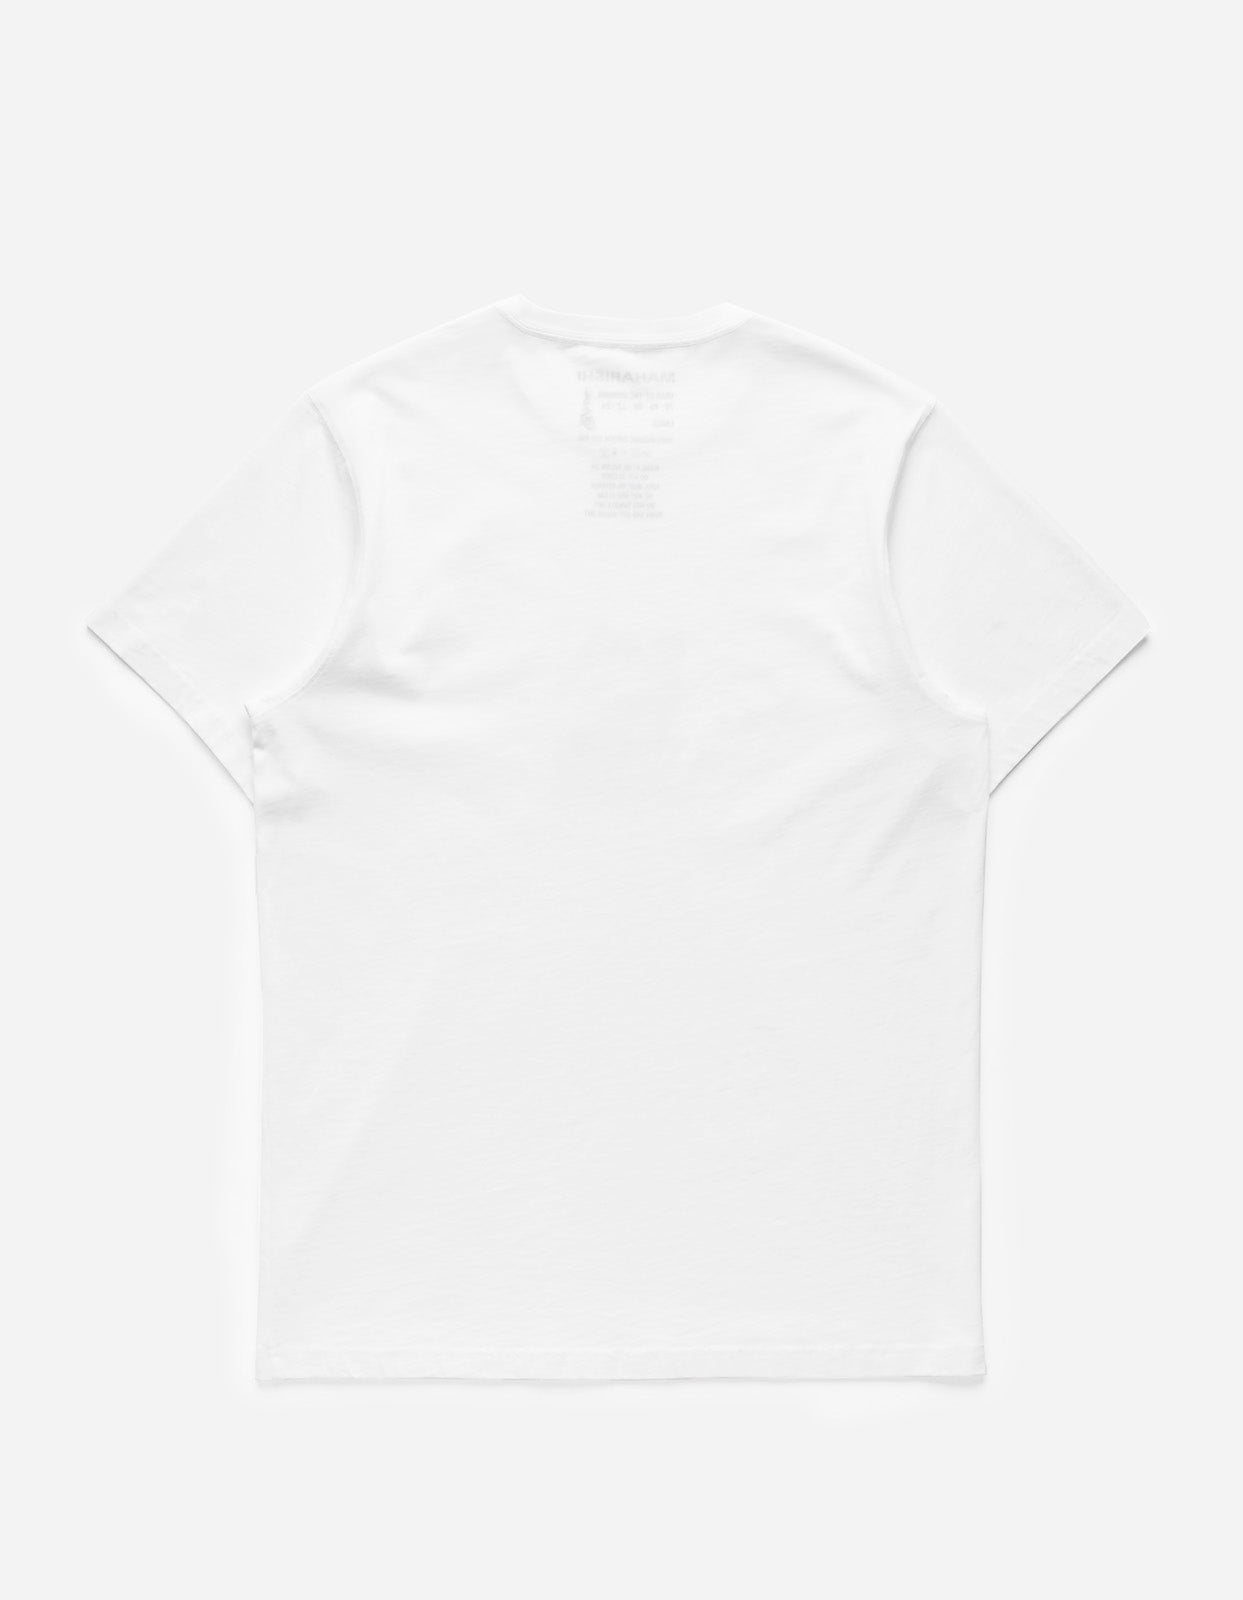 1280 Take Tora T-Shirt White